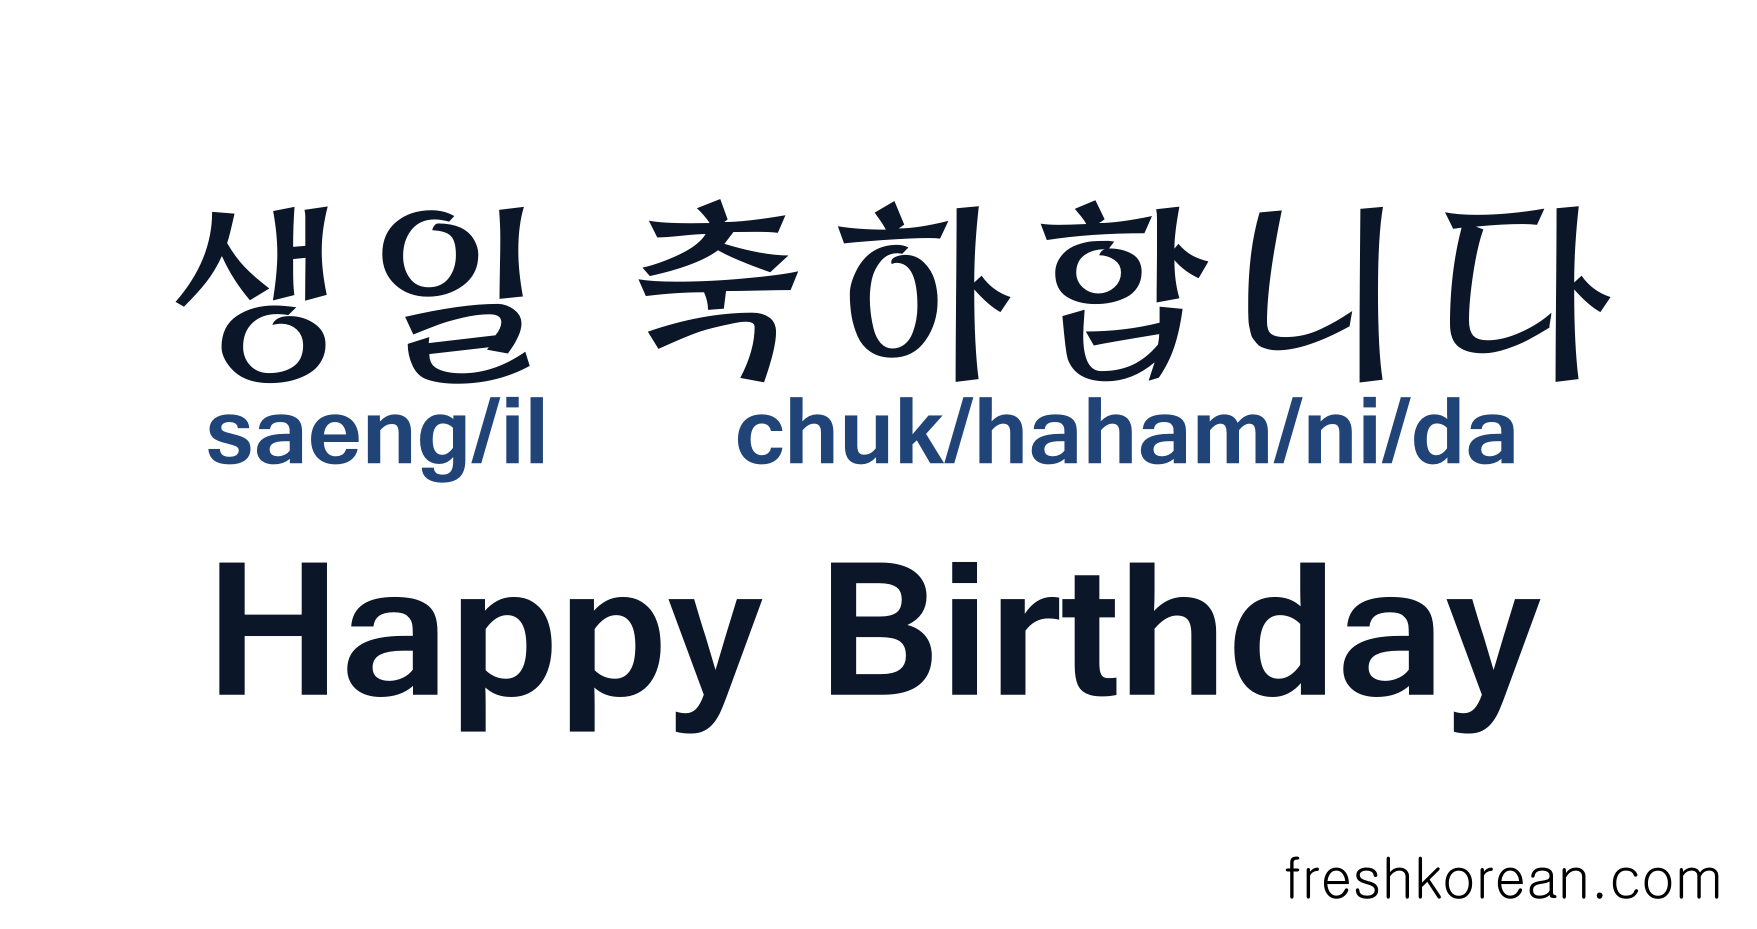 Happy Birthday in Korean - Fresh Korean 2